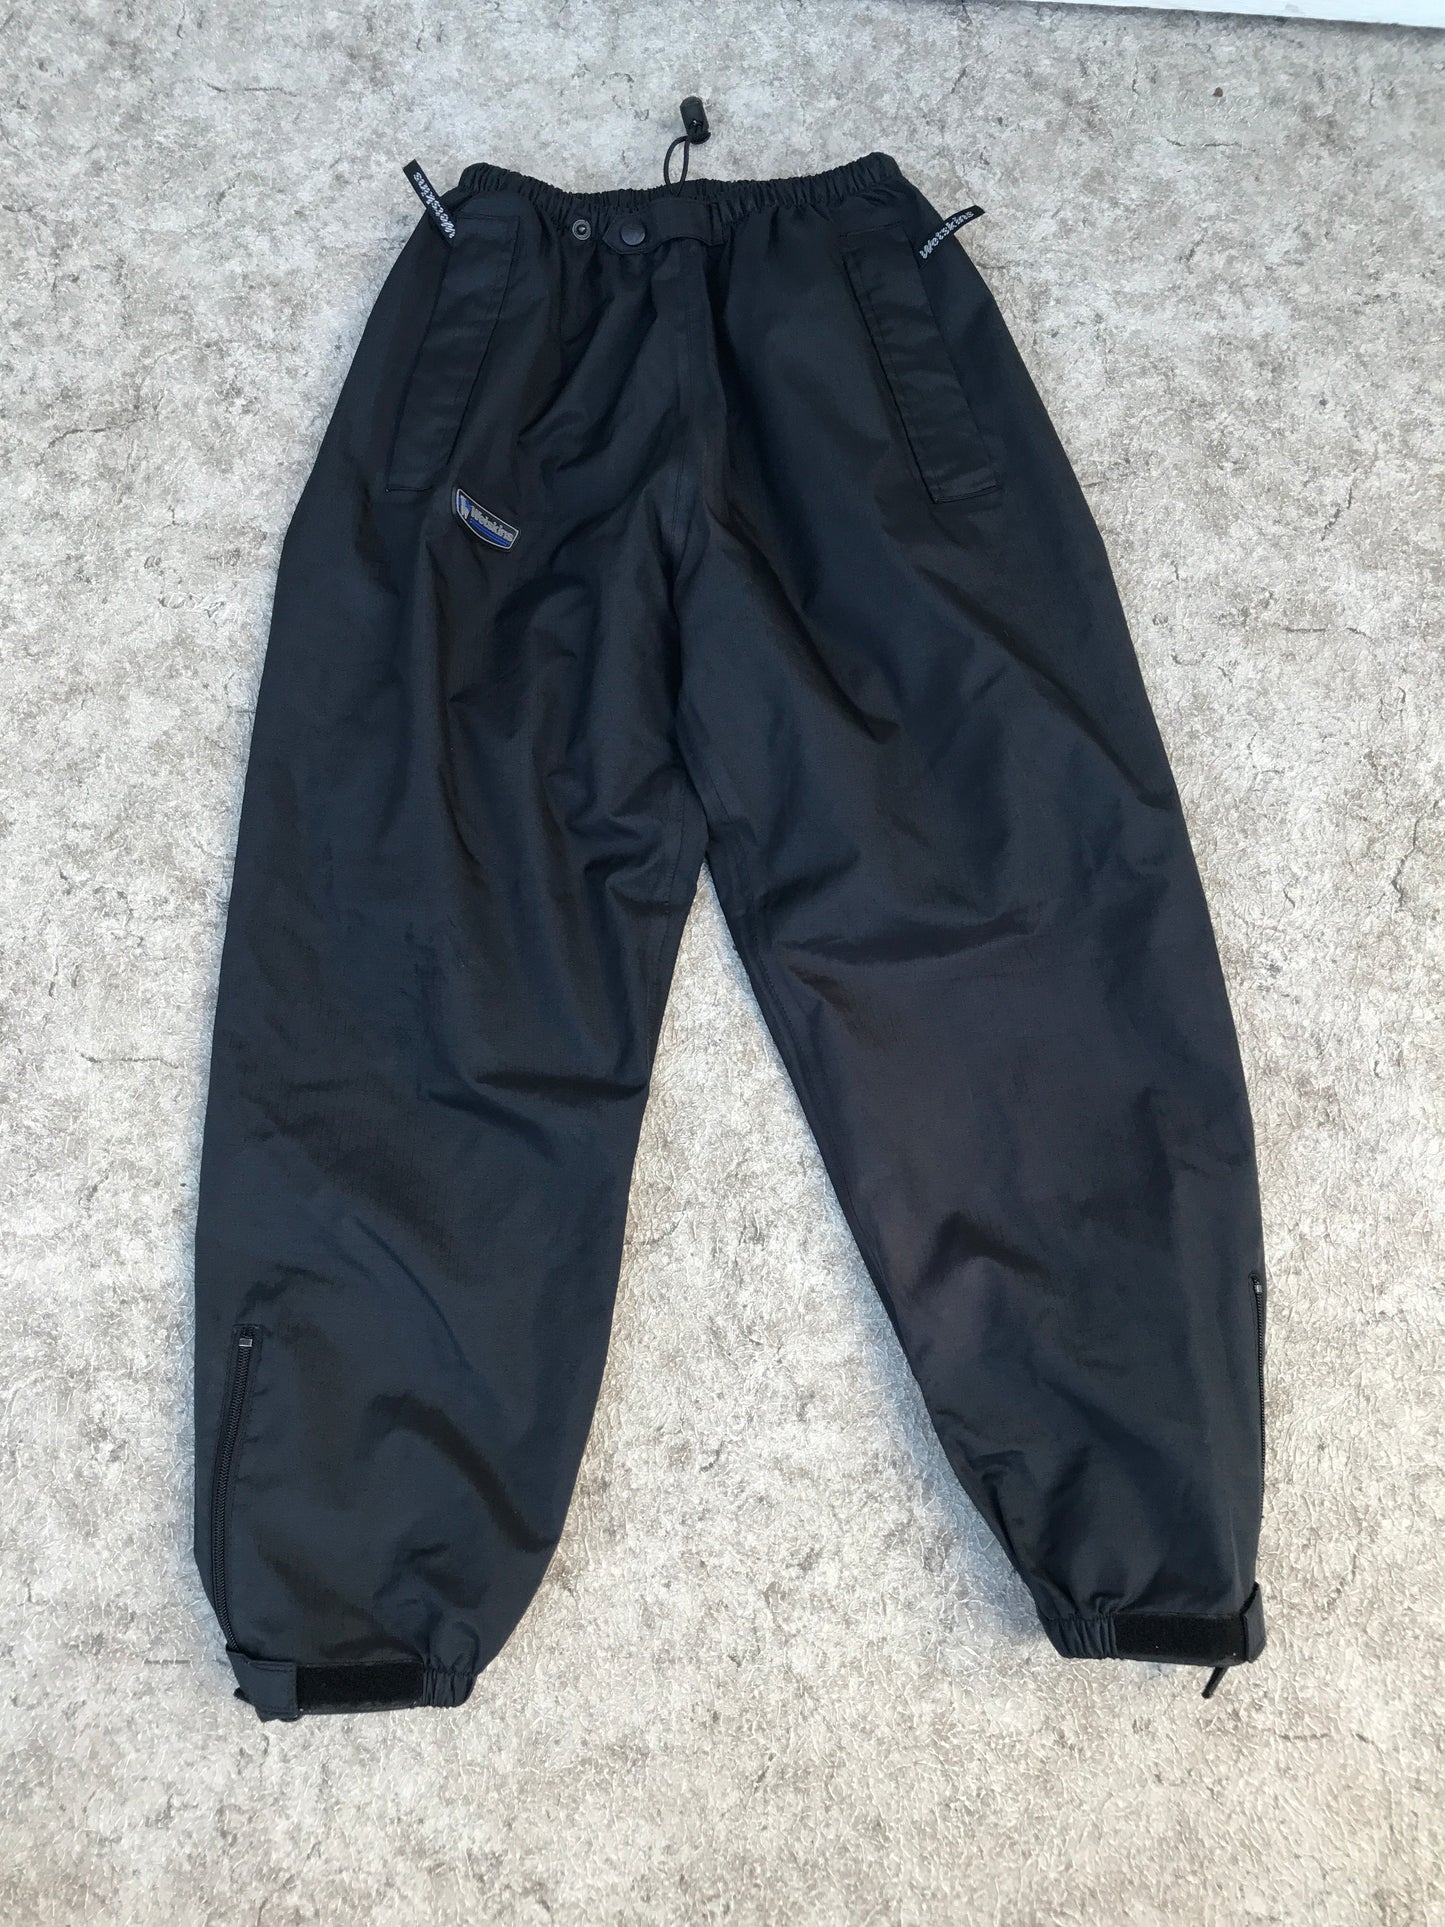 Rain Pants Child 12-14 Wetskins Black Waterproof